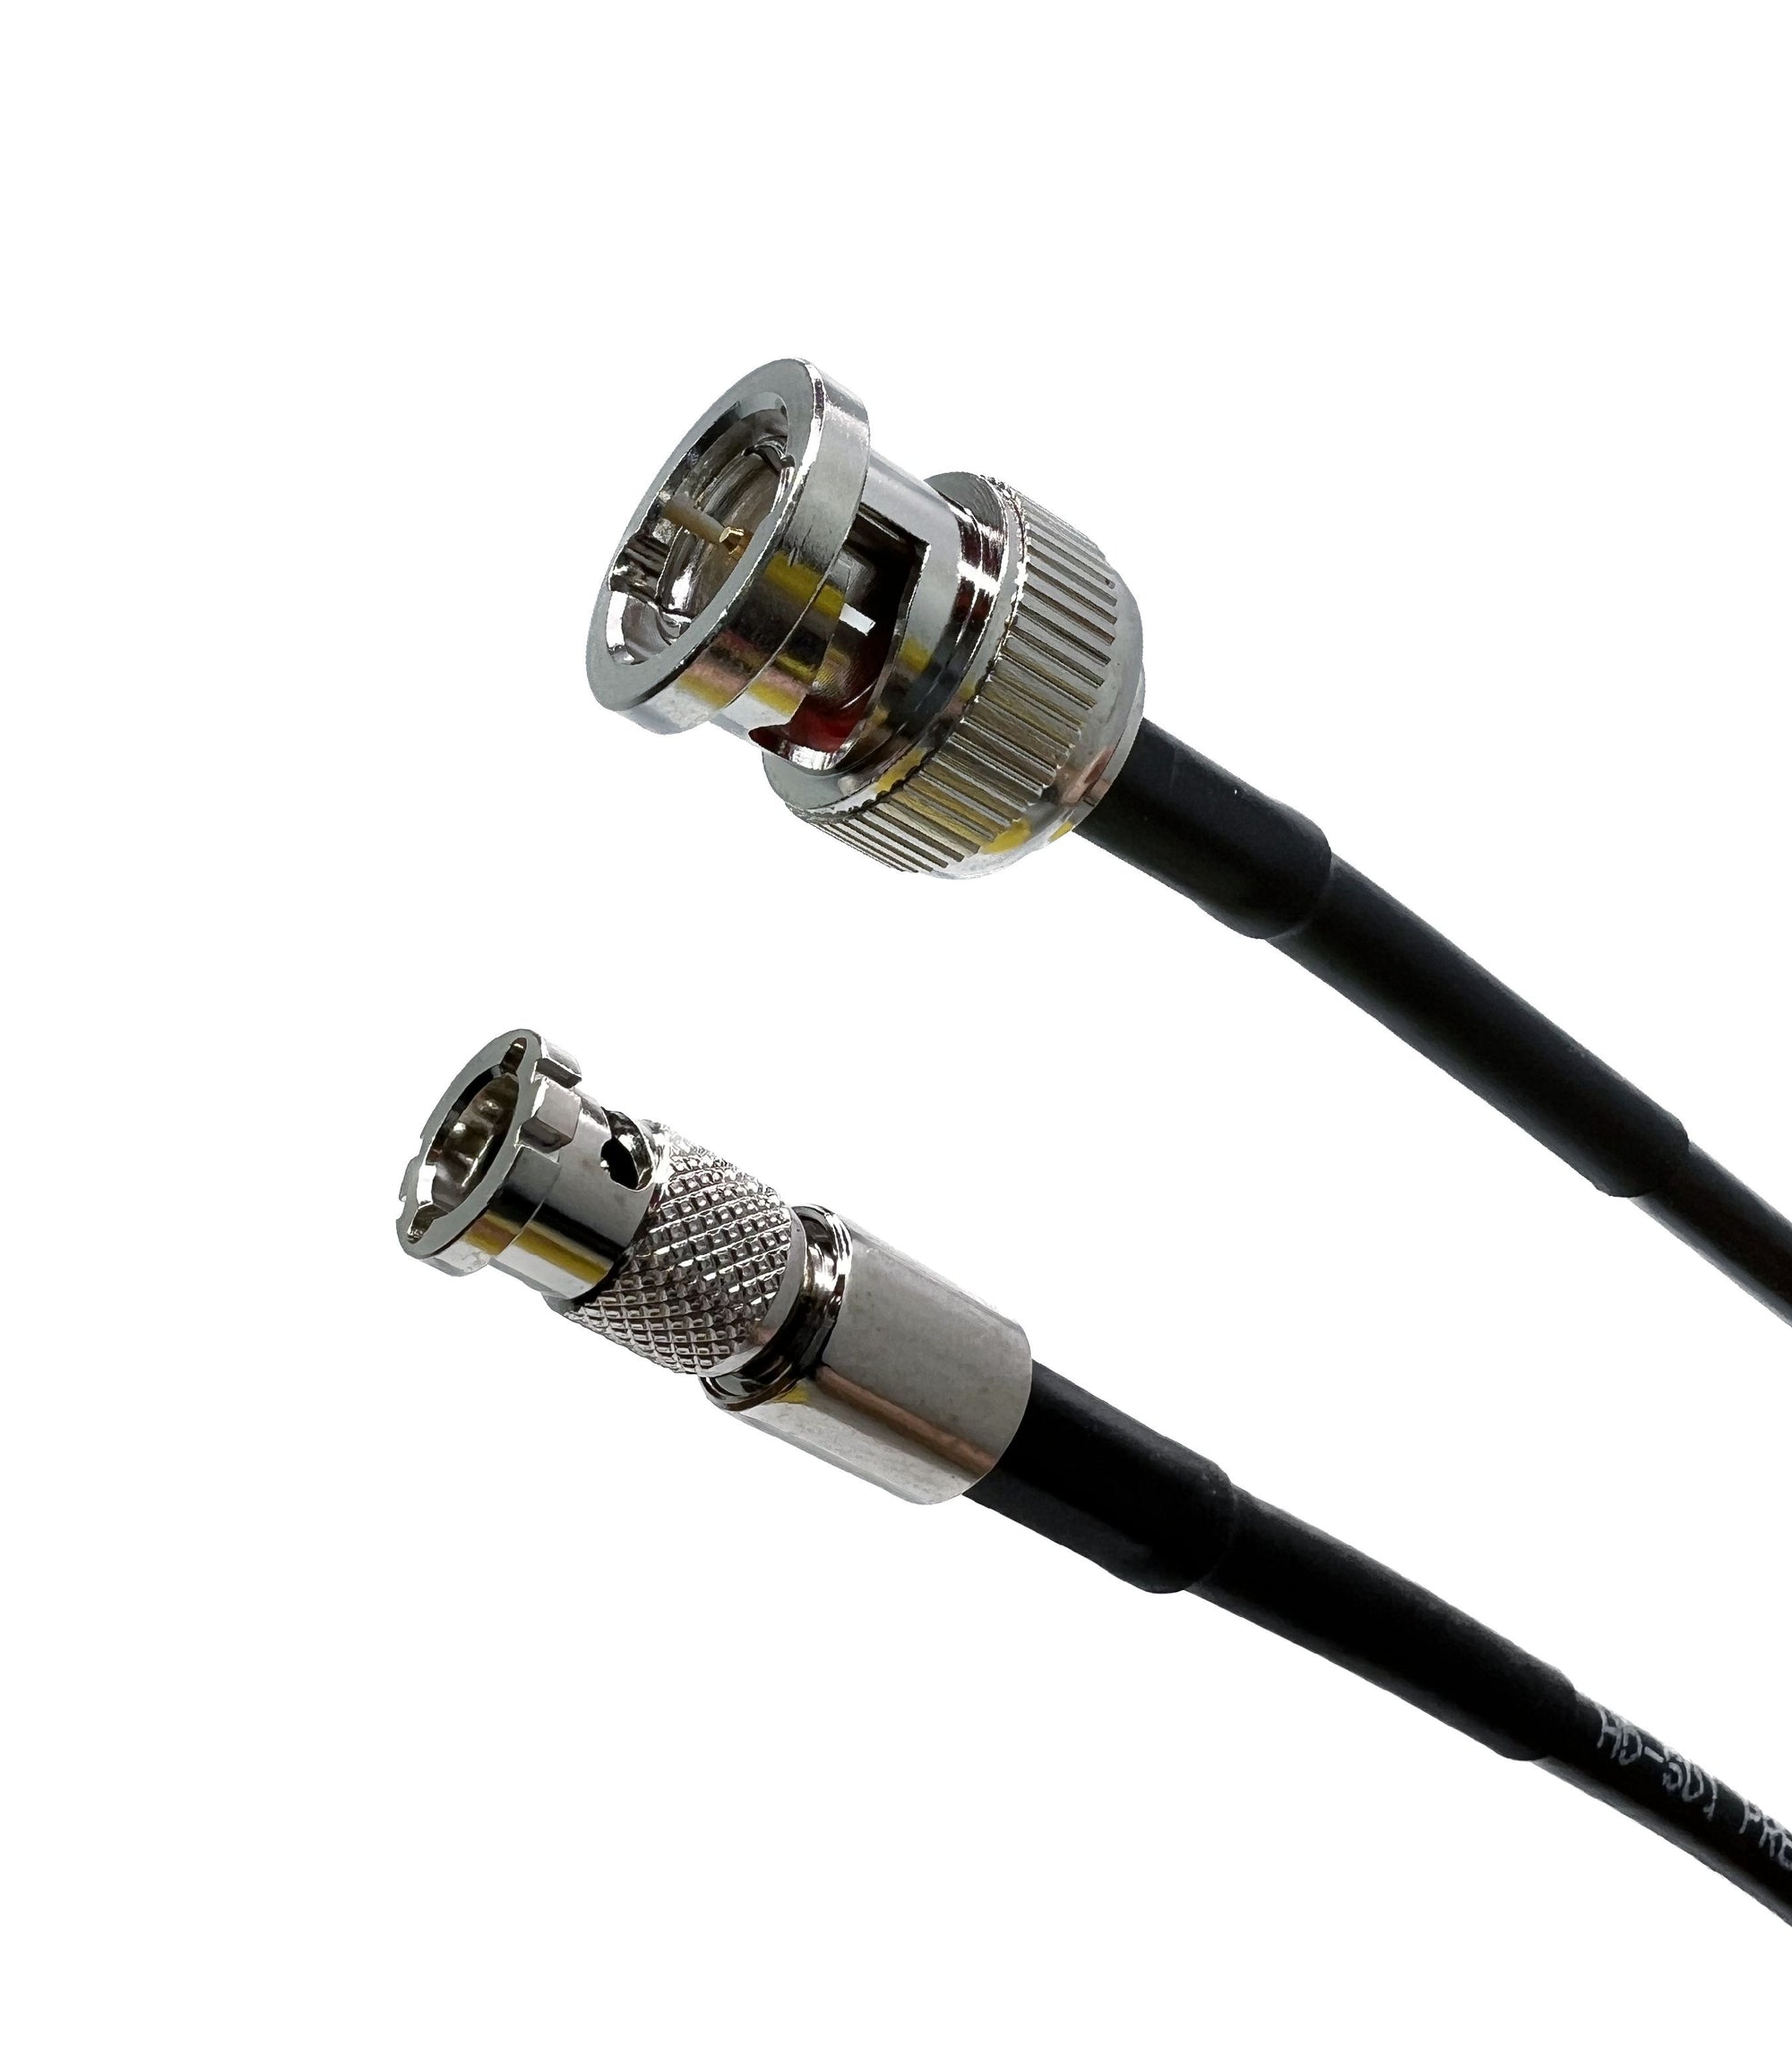 BNC Male to High Density Micro BNC HD-SDI 3G/6G Video Adapter Cable